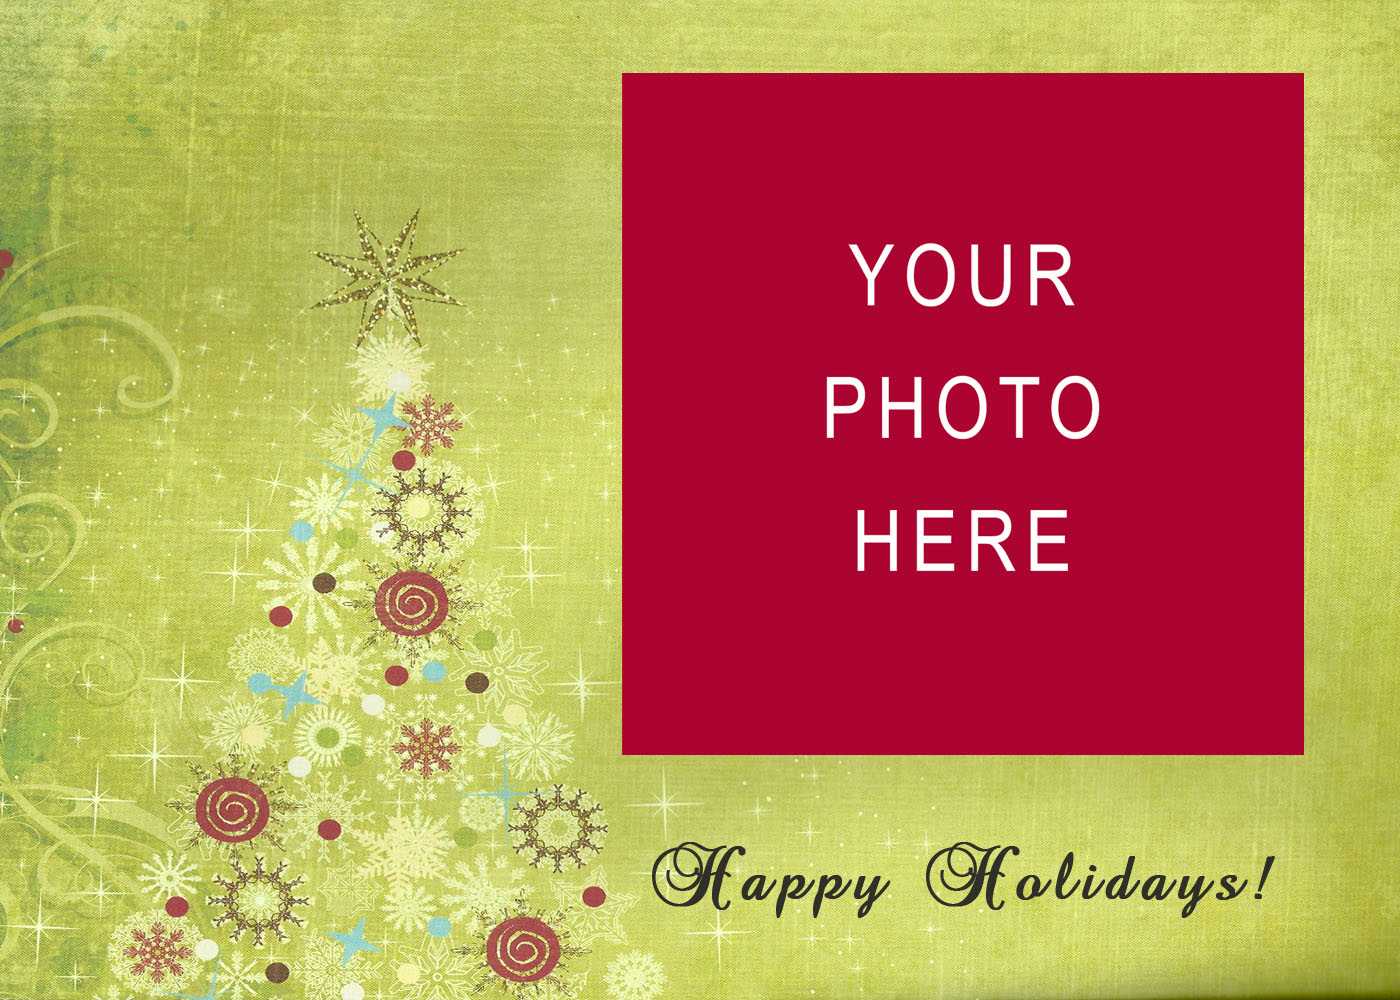 Free Christmas Card Templates | E Commercewordpress Pertaining To Free Christmas Card Templates For Photographers